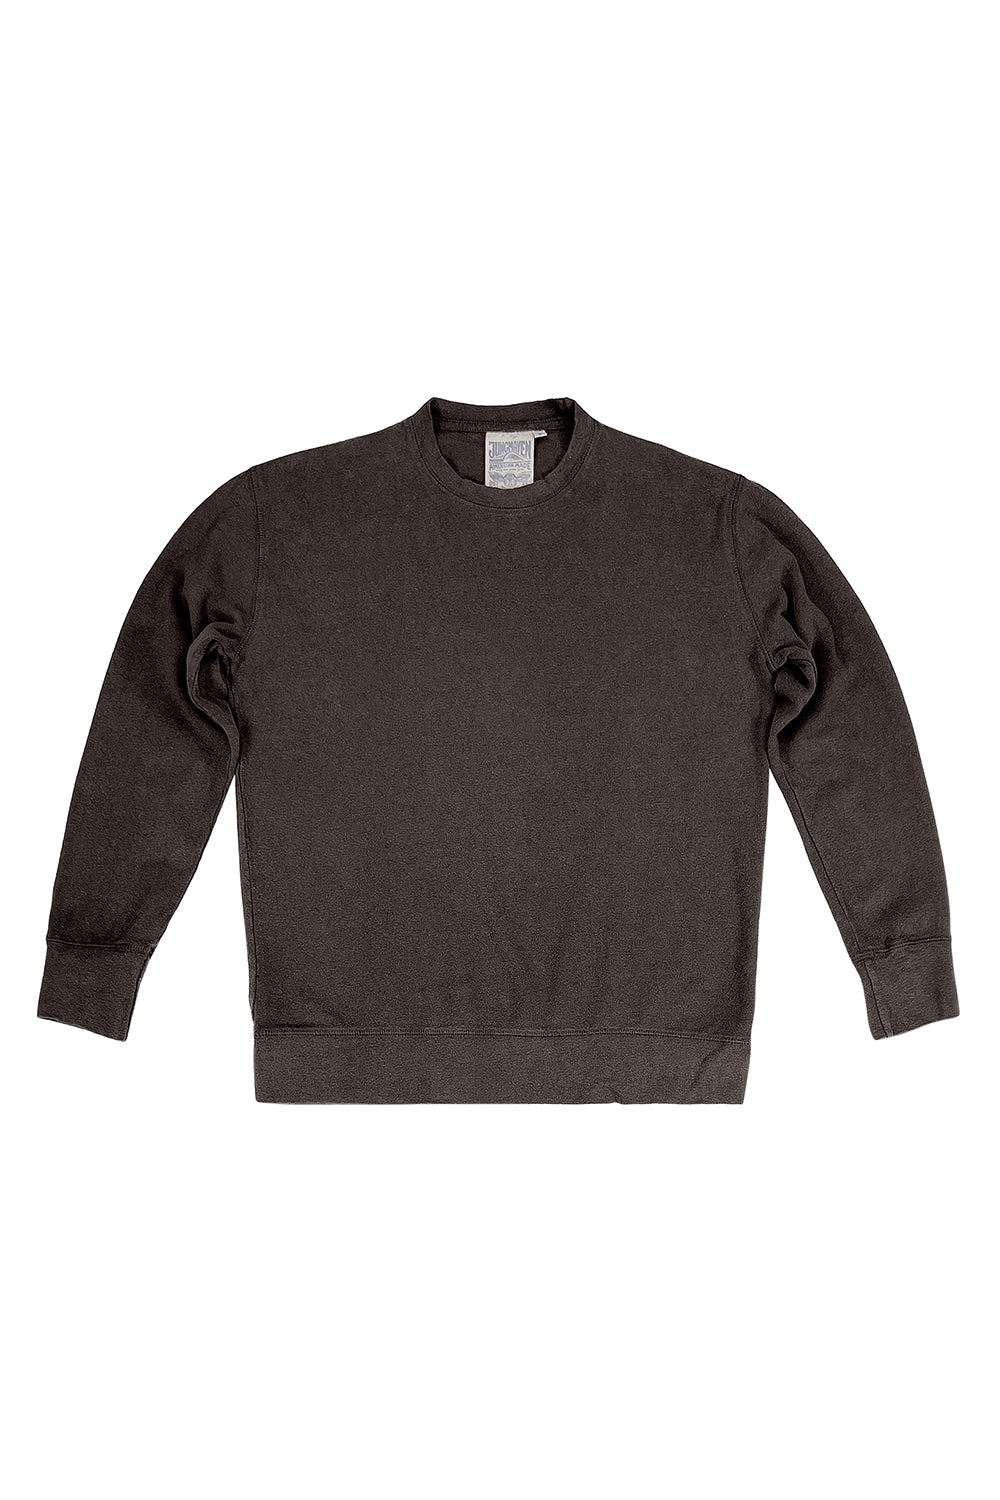 California Pullover | Jungmaven Hemp Clothing & Accessories / Color: Coffee Bean